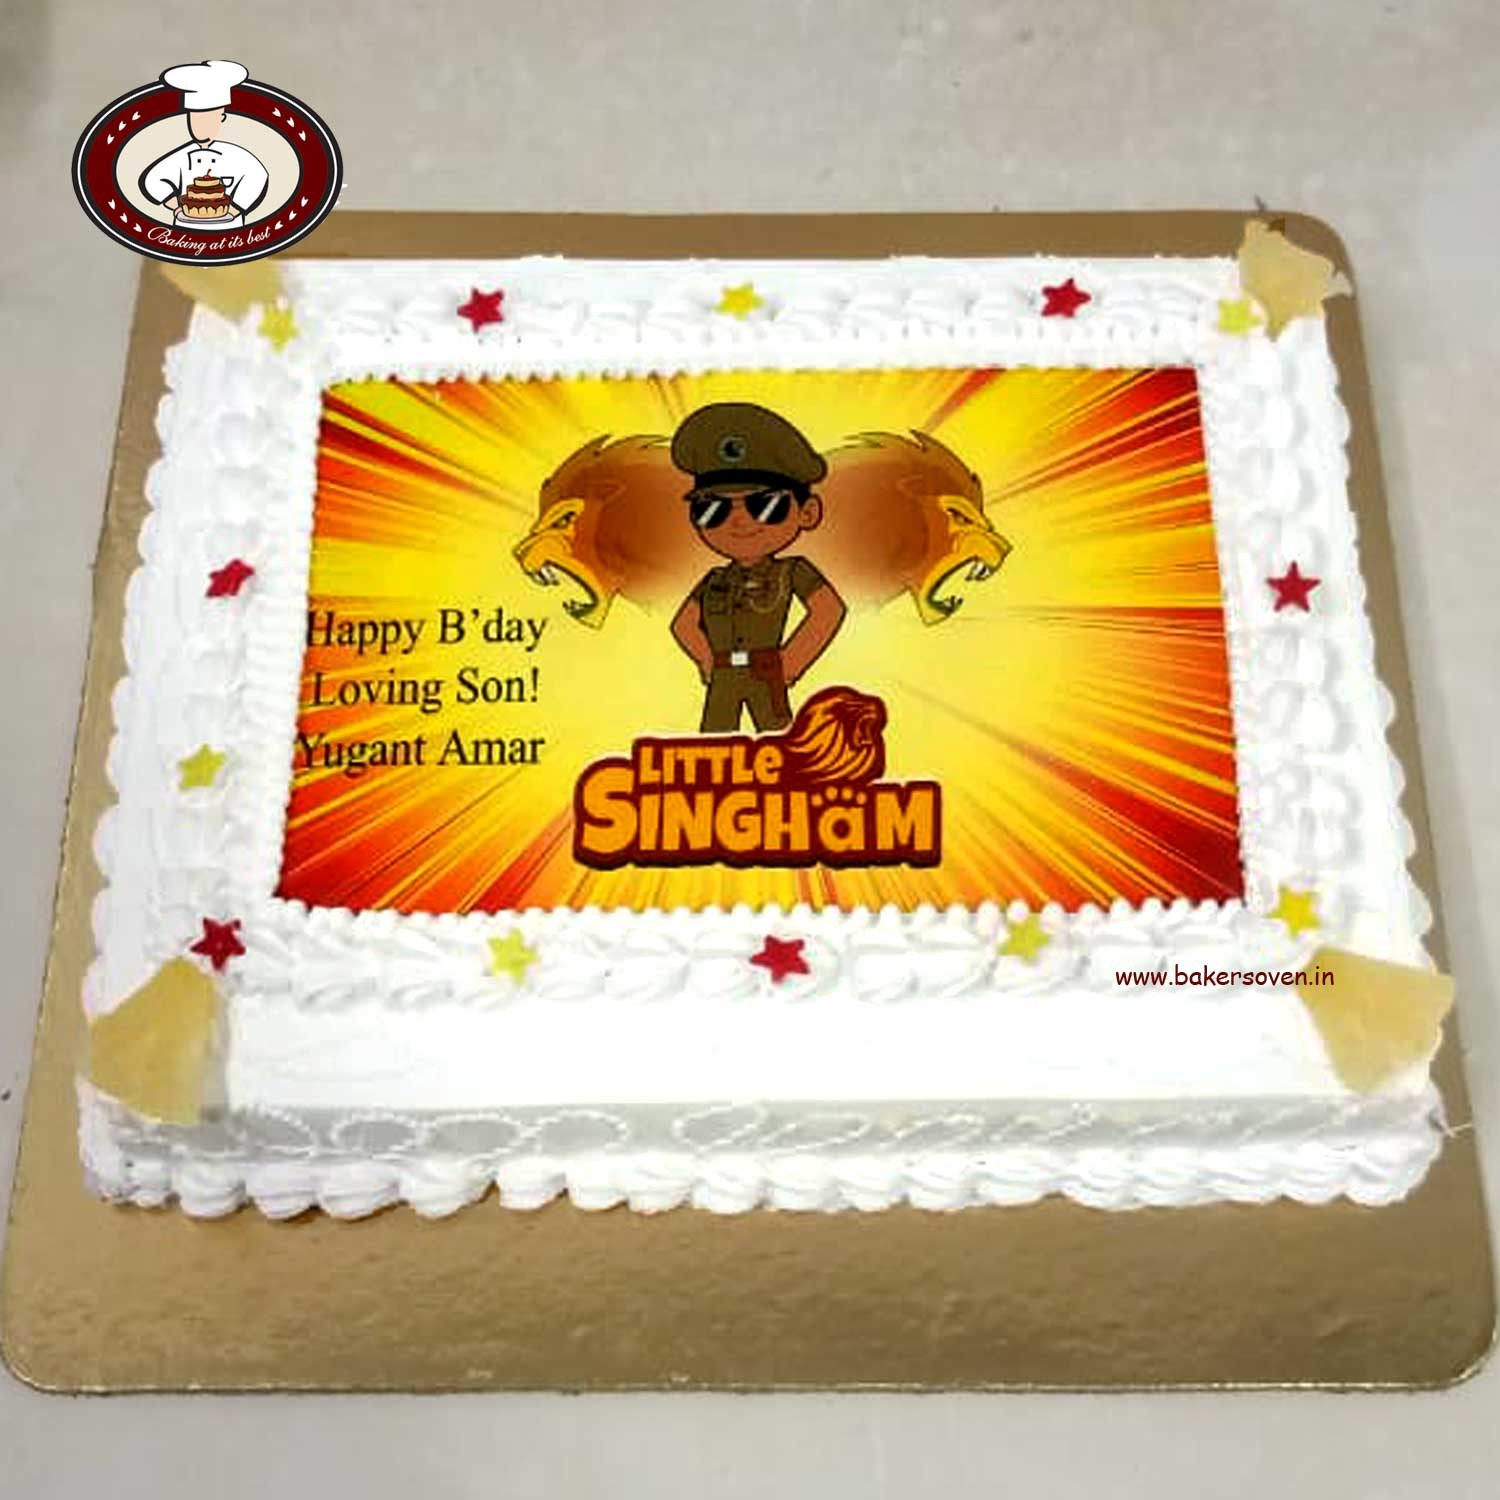 Little Singham Cake|Cake delivery| Cakes in Delhi-NCR| | Cakespot